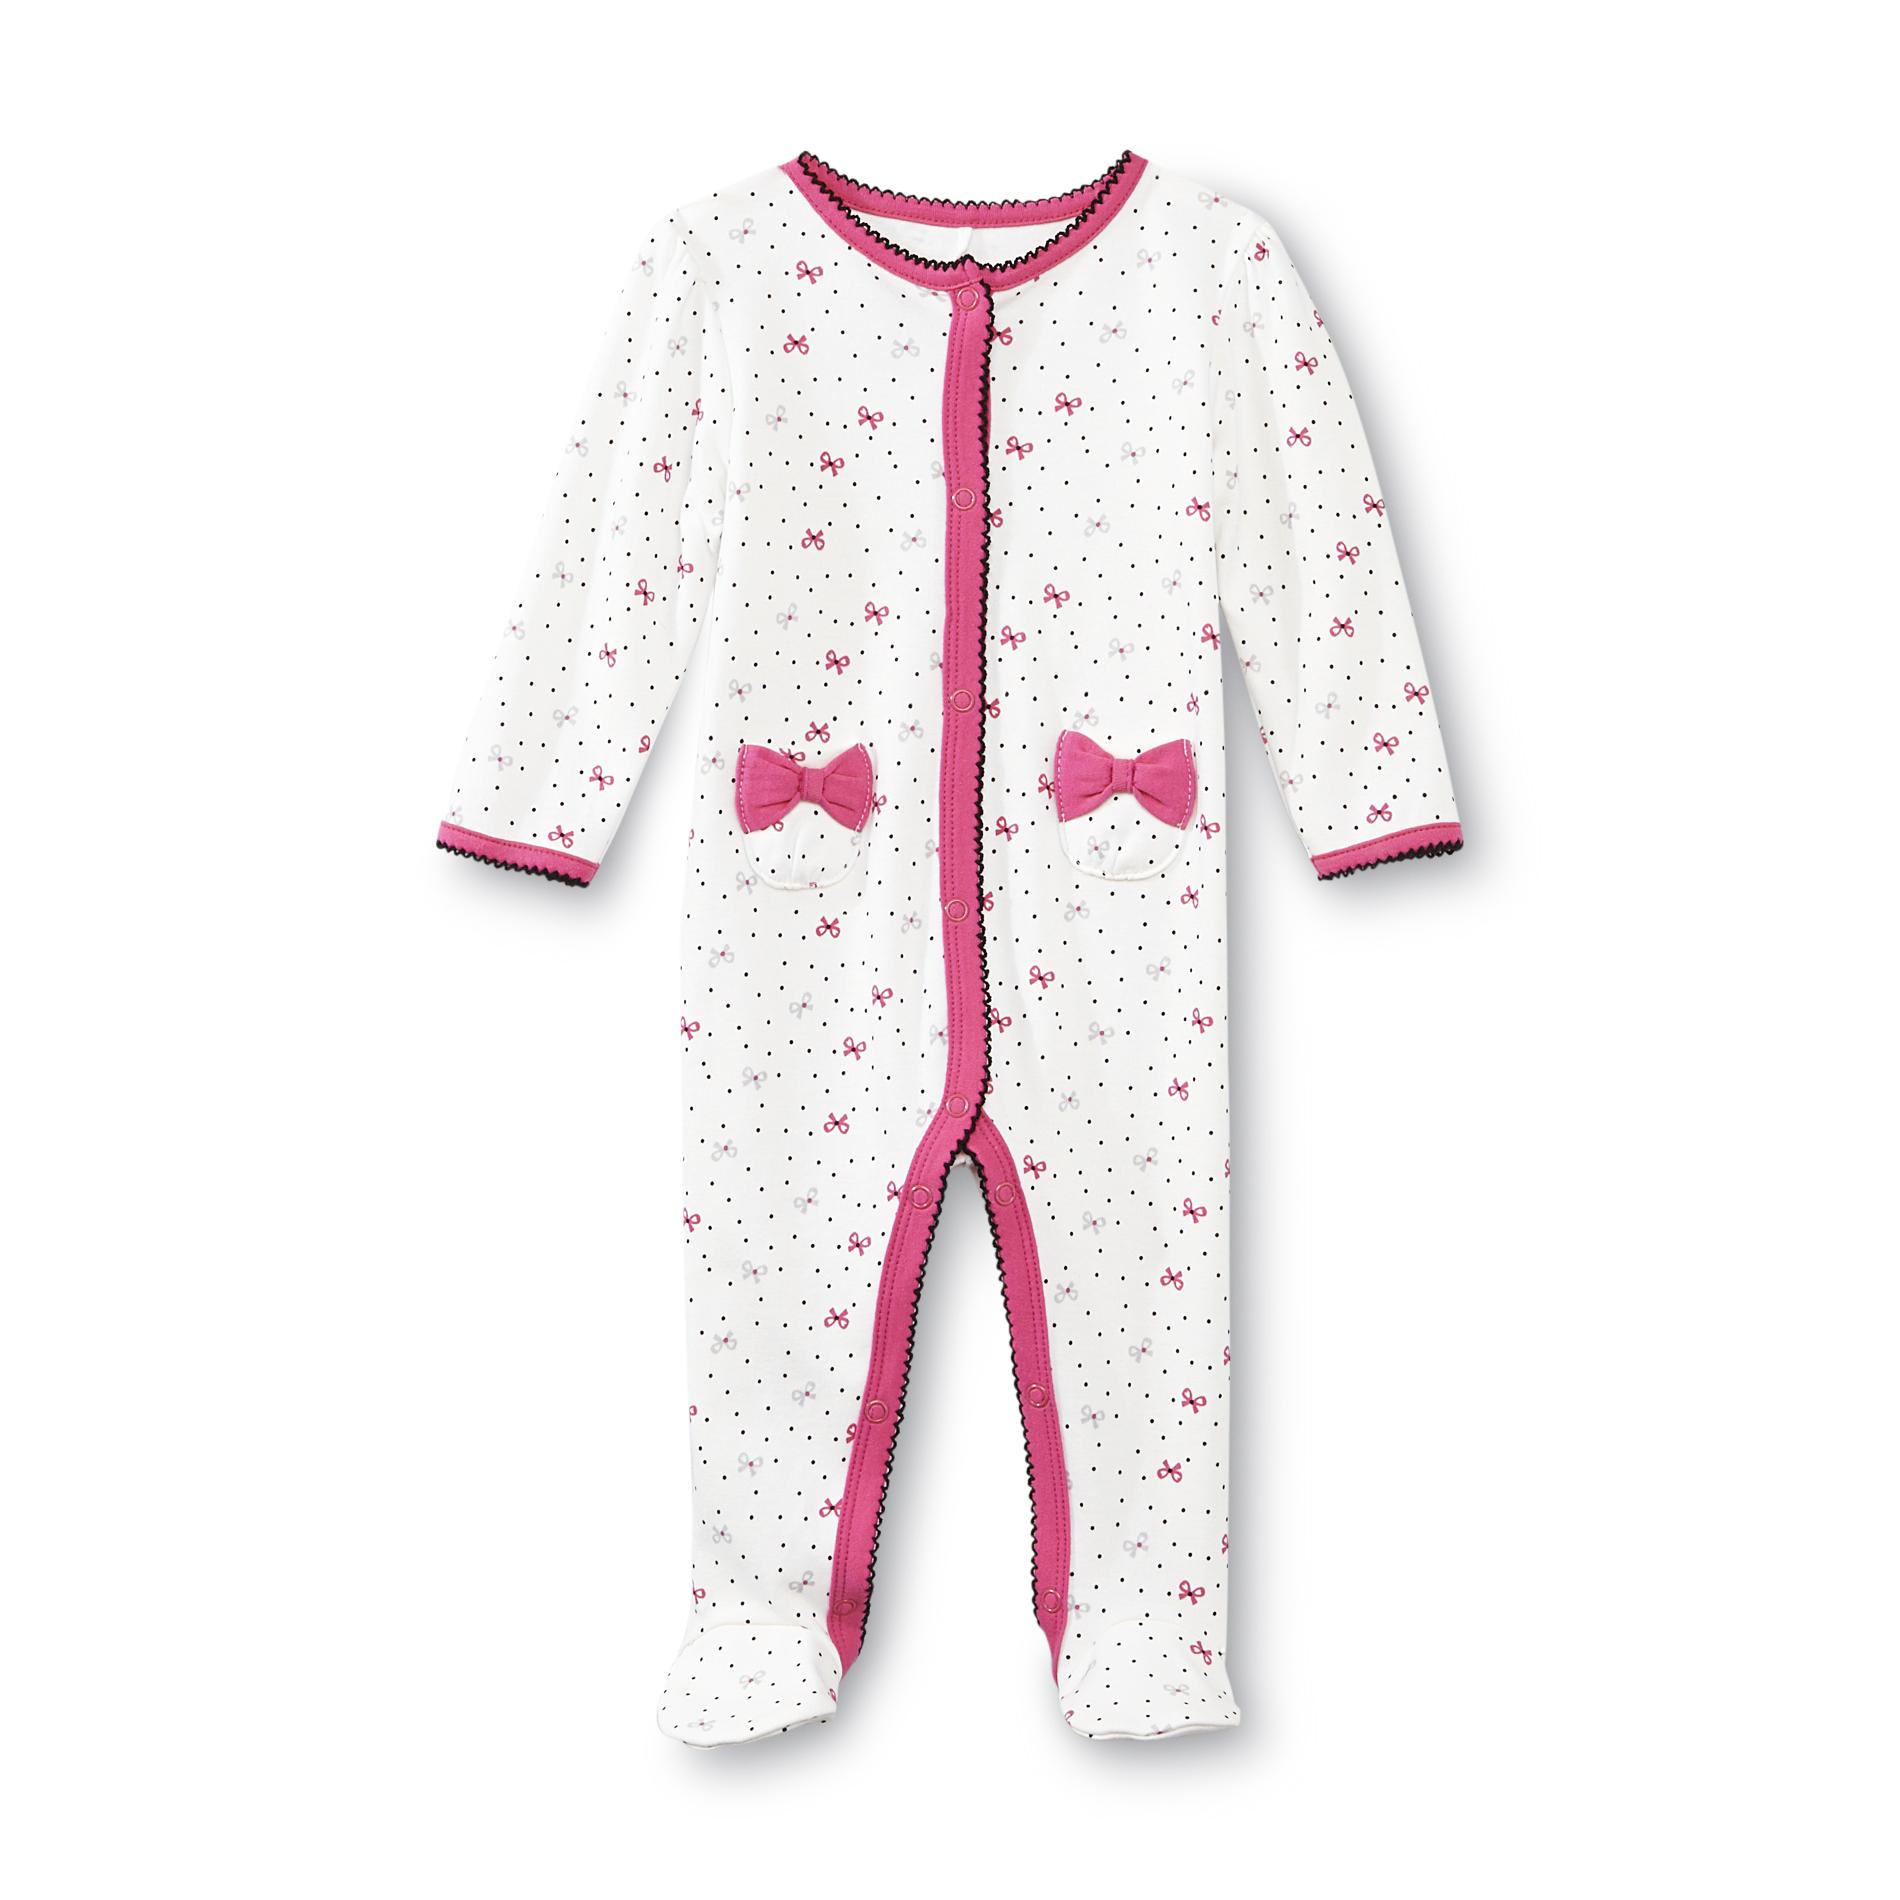 Little Wonders Newborn Girl's Footed Sleeper - Bows & Polka Dot